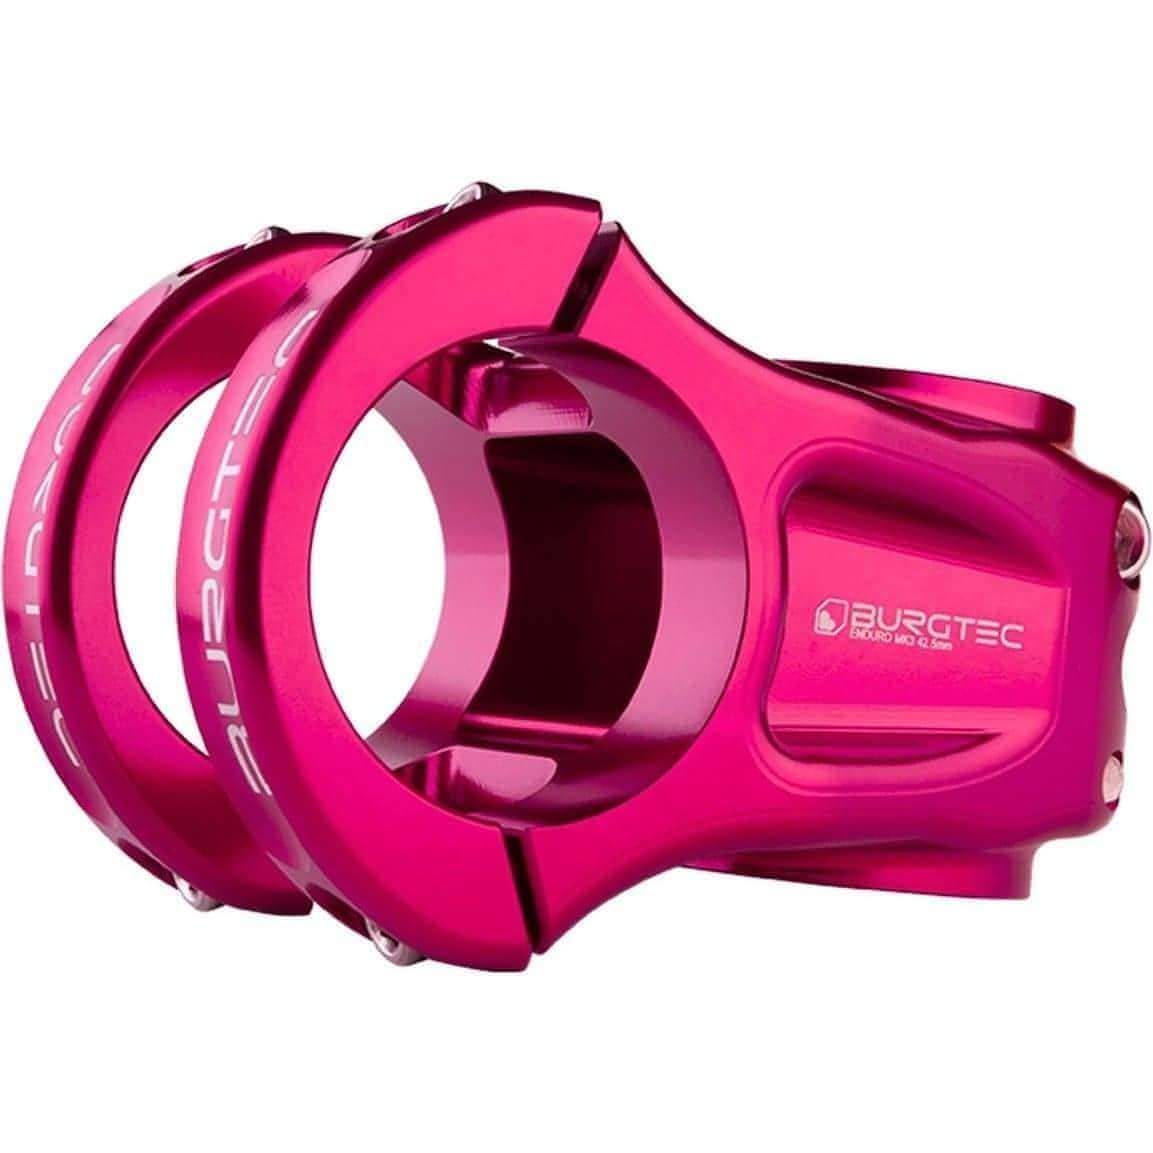 Burgtec Enduro MK3 35mm Stem - Pink 712885688296 - Start Fitness